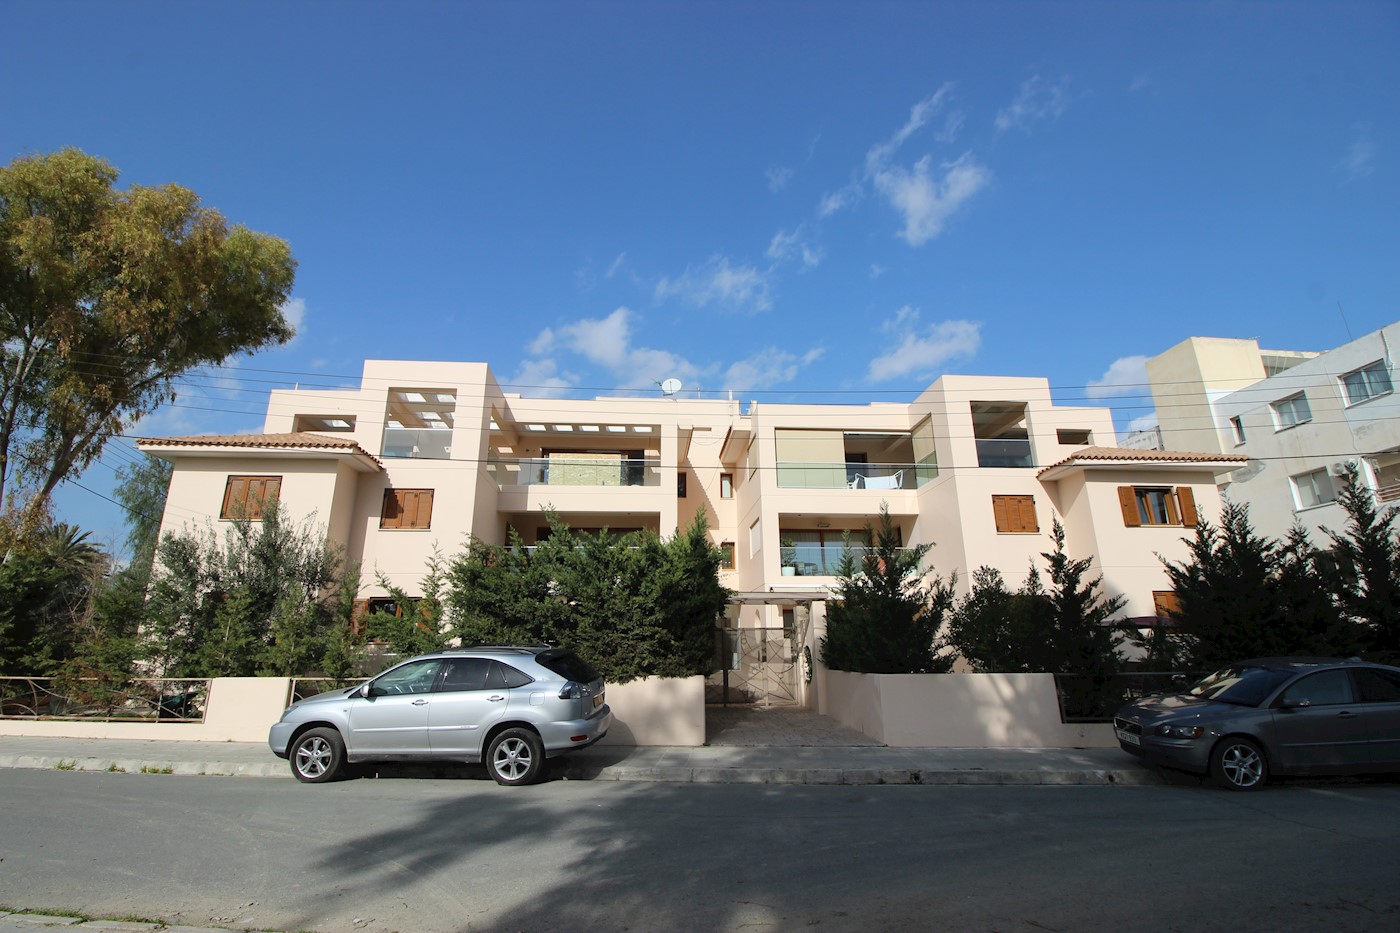 Incomplete two-bedroom apartment in Chryseleousa (parish), Strovolos, Nicosia 1/16